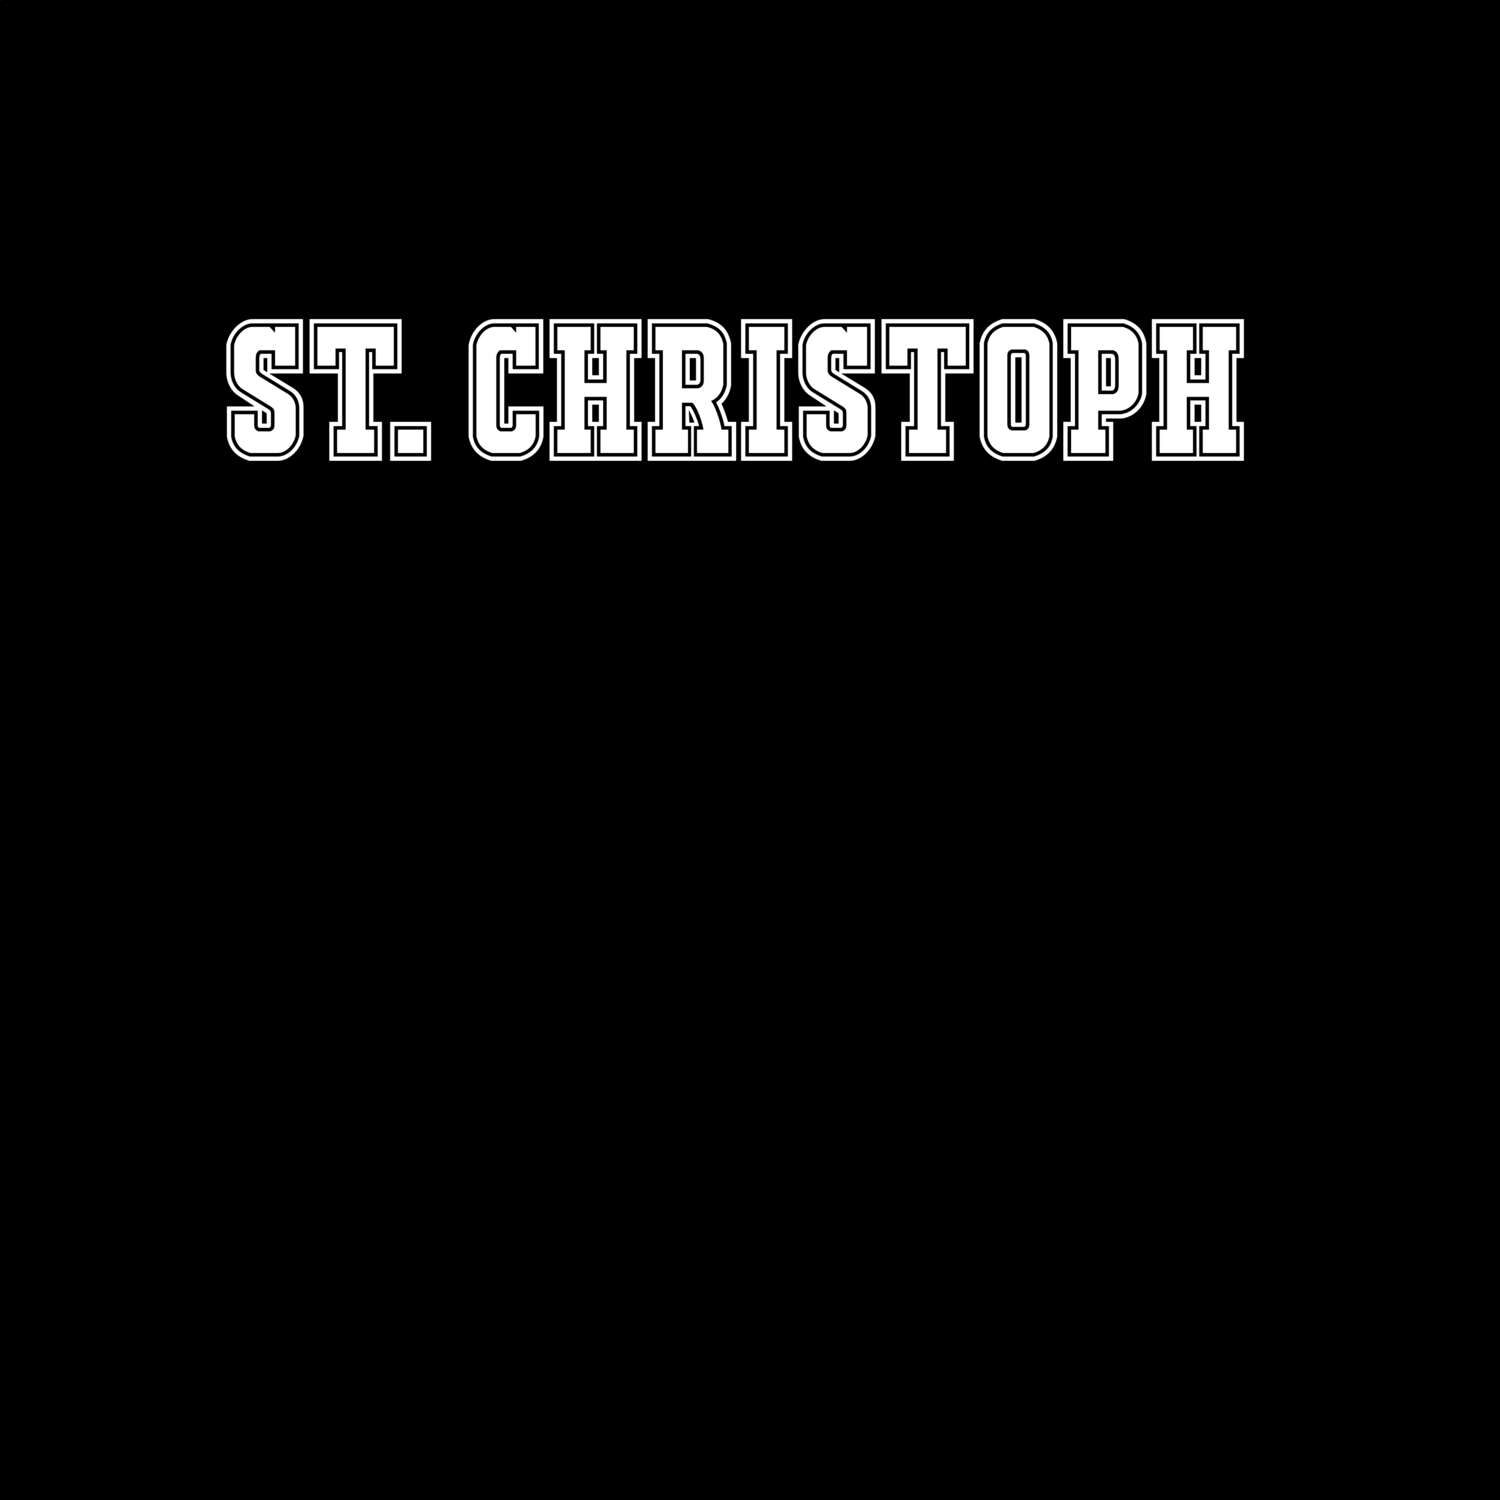 St. Christoph T-Shirt »Classic«